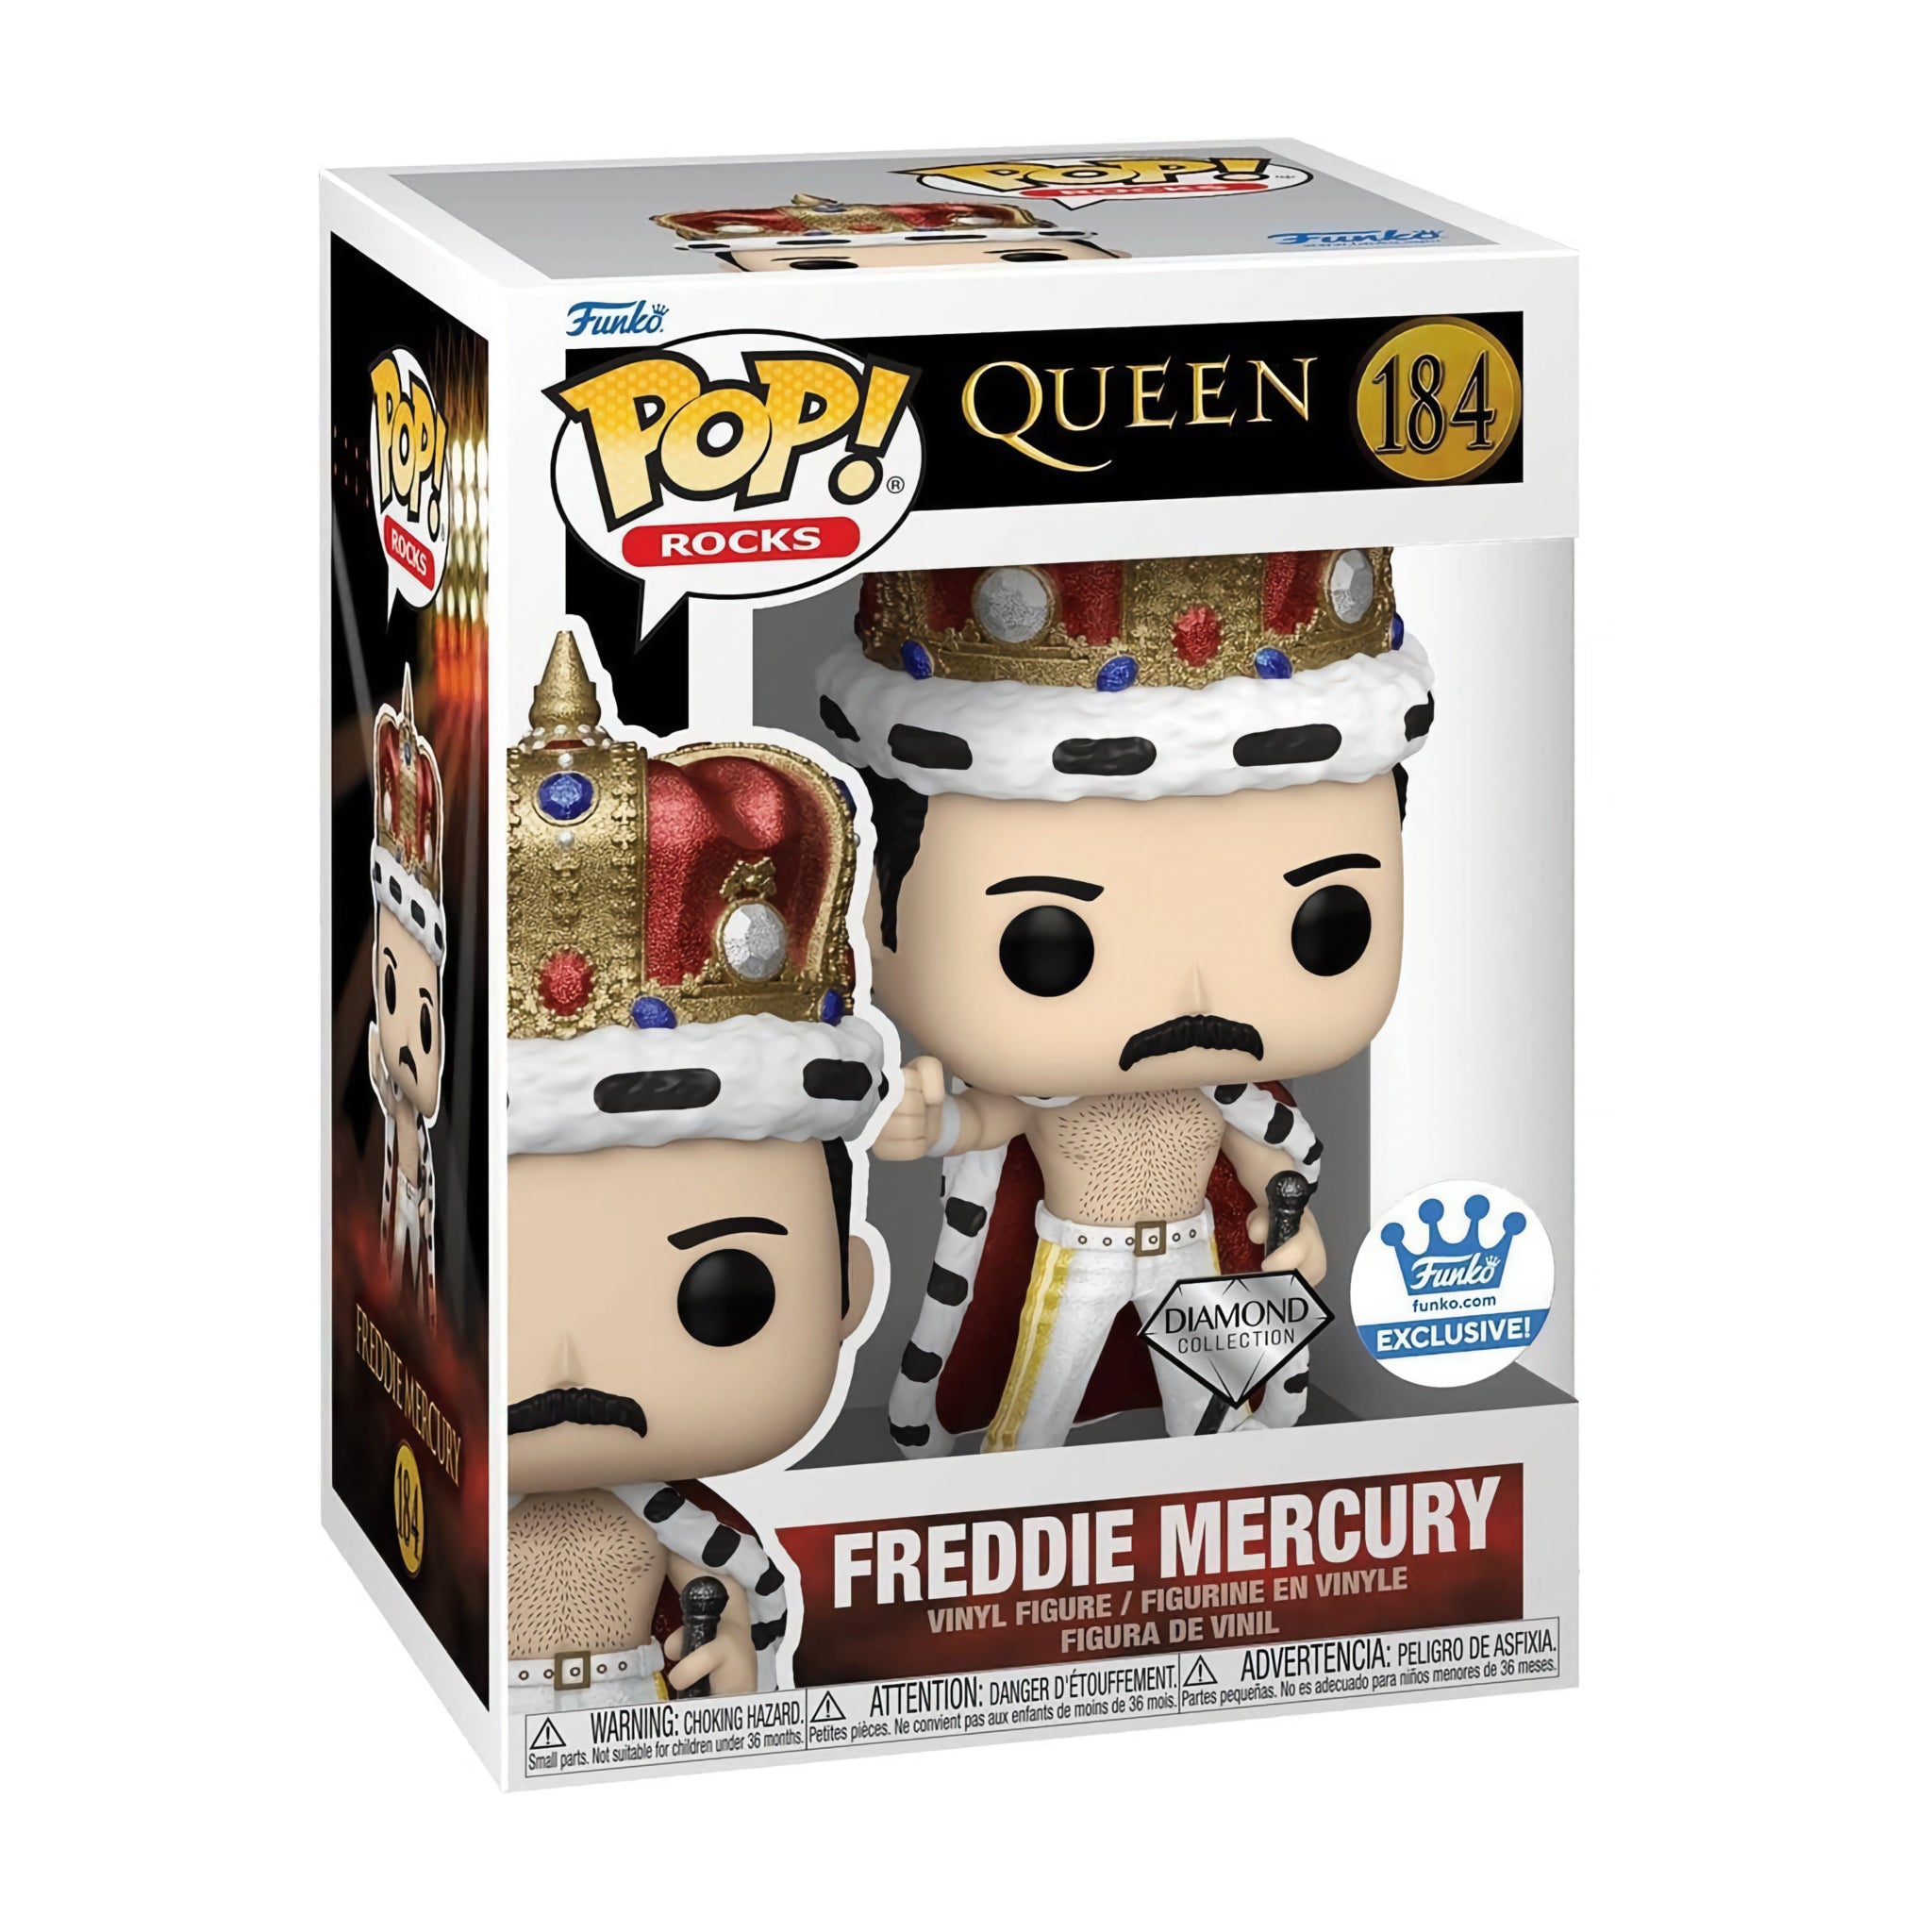 Freddie Mercury DIAMOND Funko Pop! FUNKO EXCLUSIE